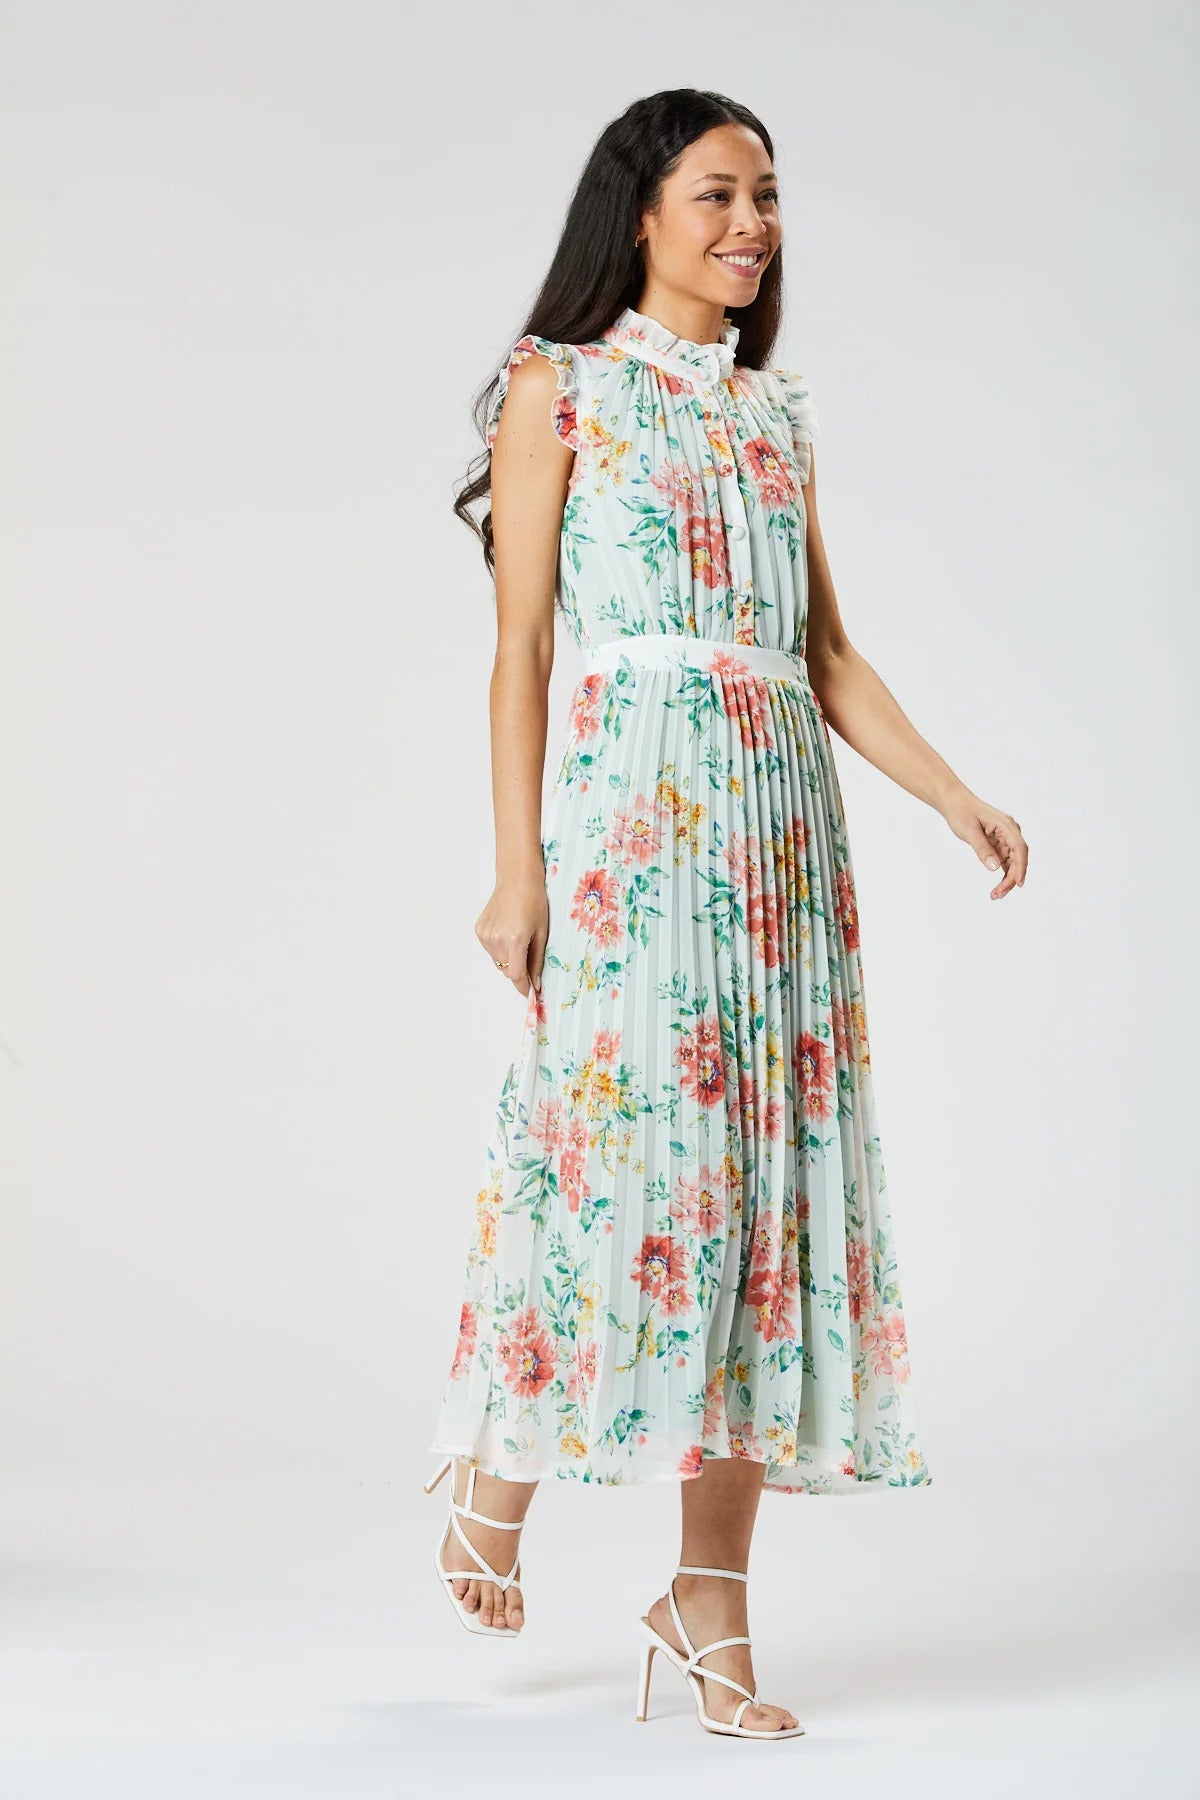 Zibi London - Lilium Print Dress - 9020210